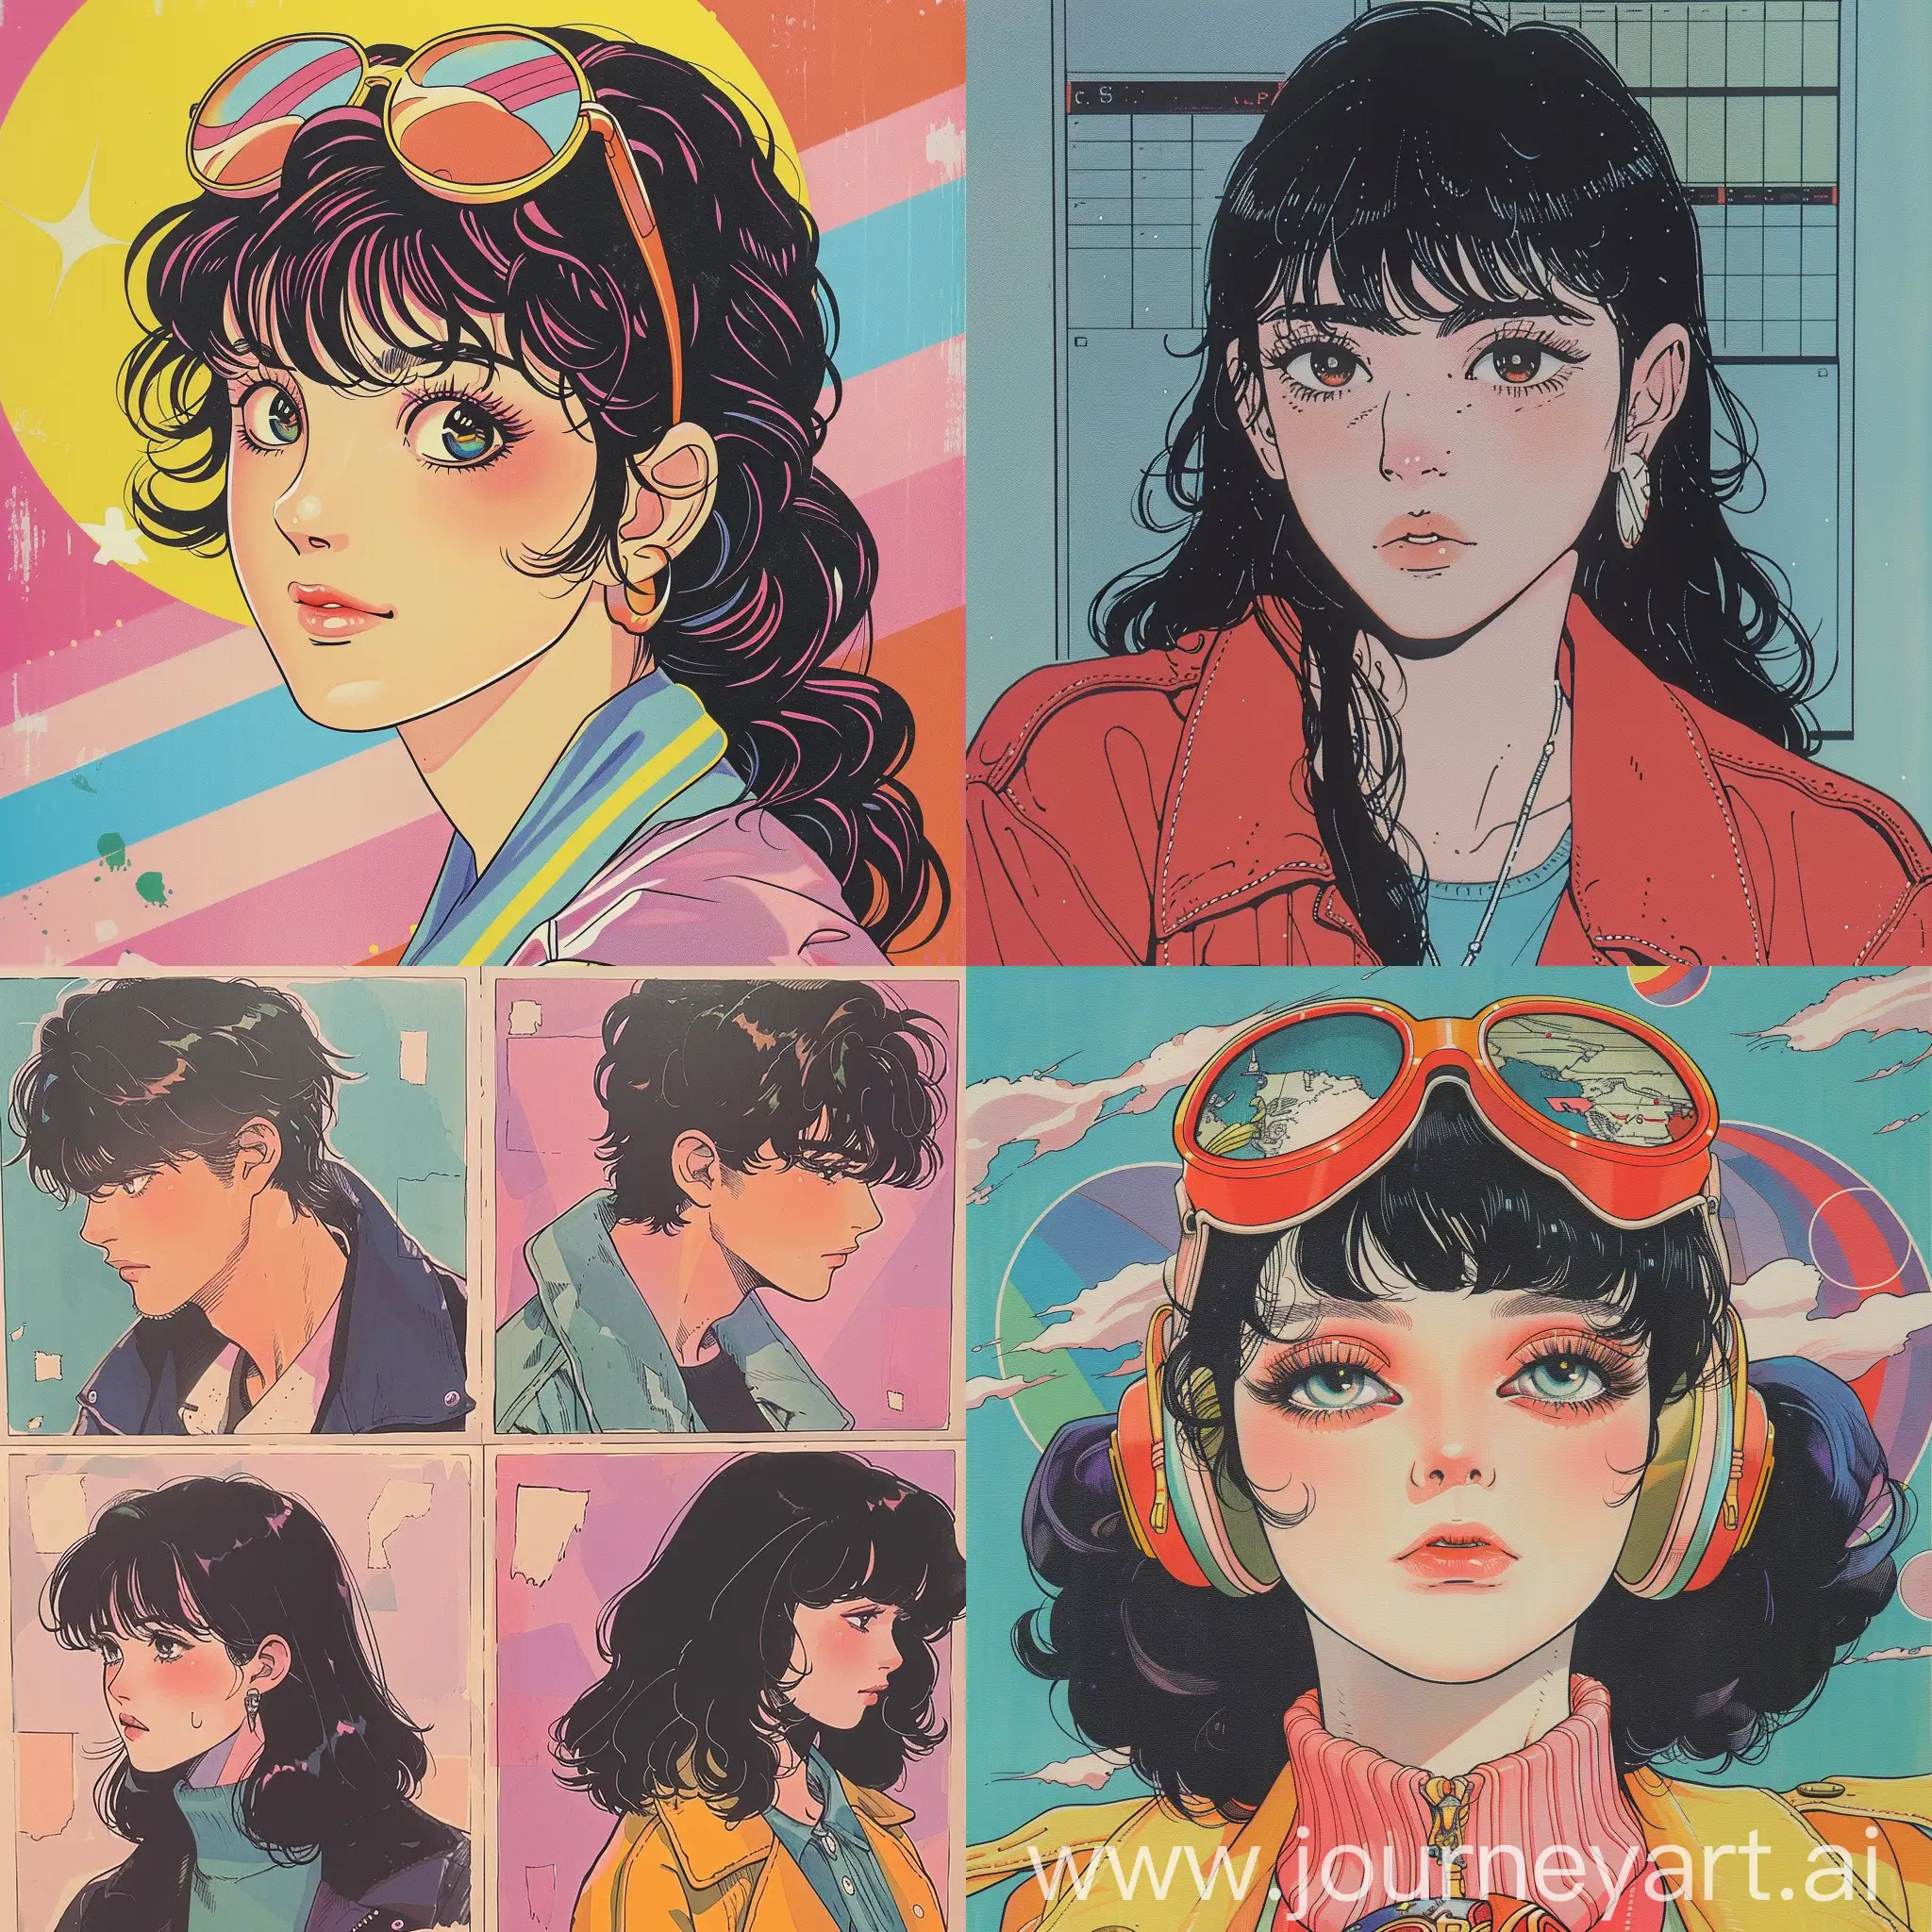 Retro-80s-Manga-Scene-with-Vibrant-Colors